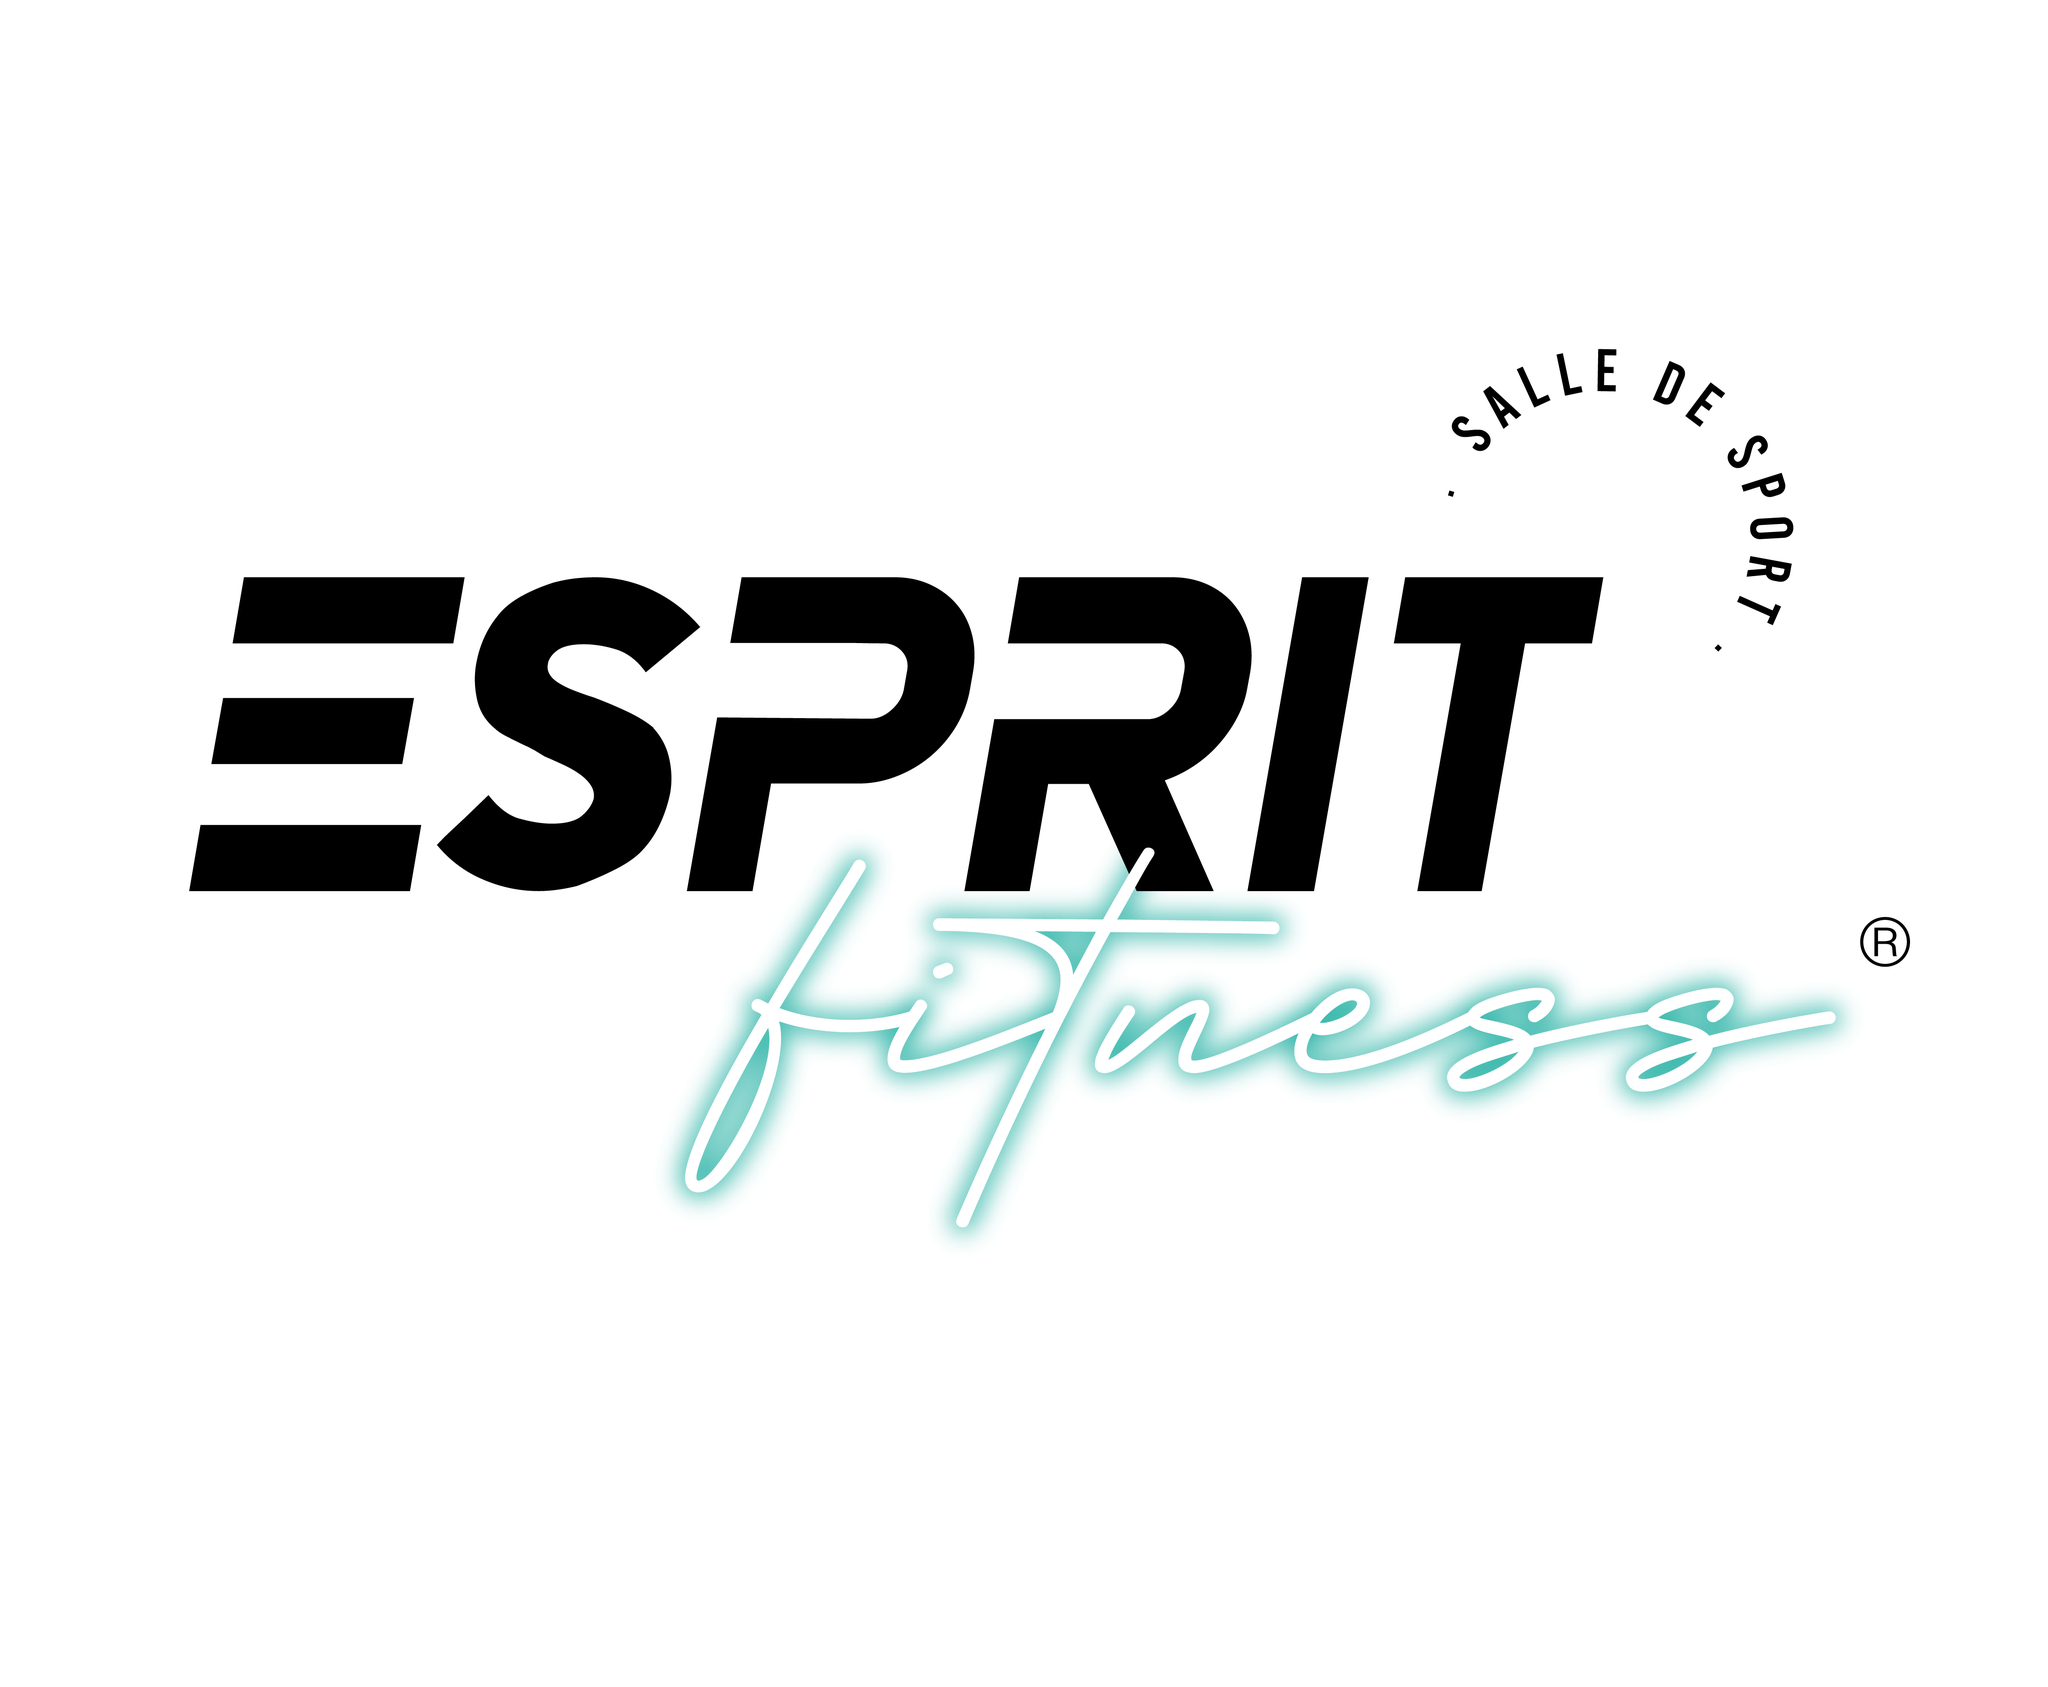 Esprit Fitness